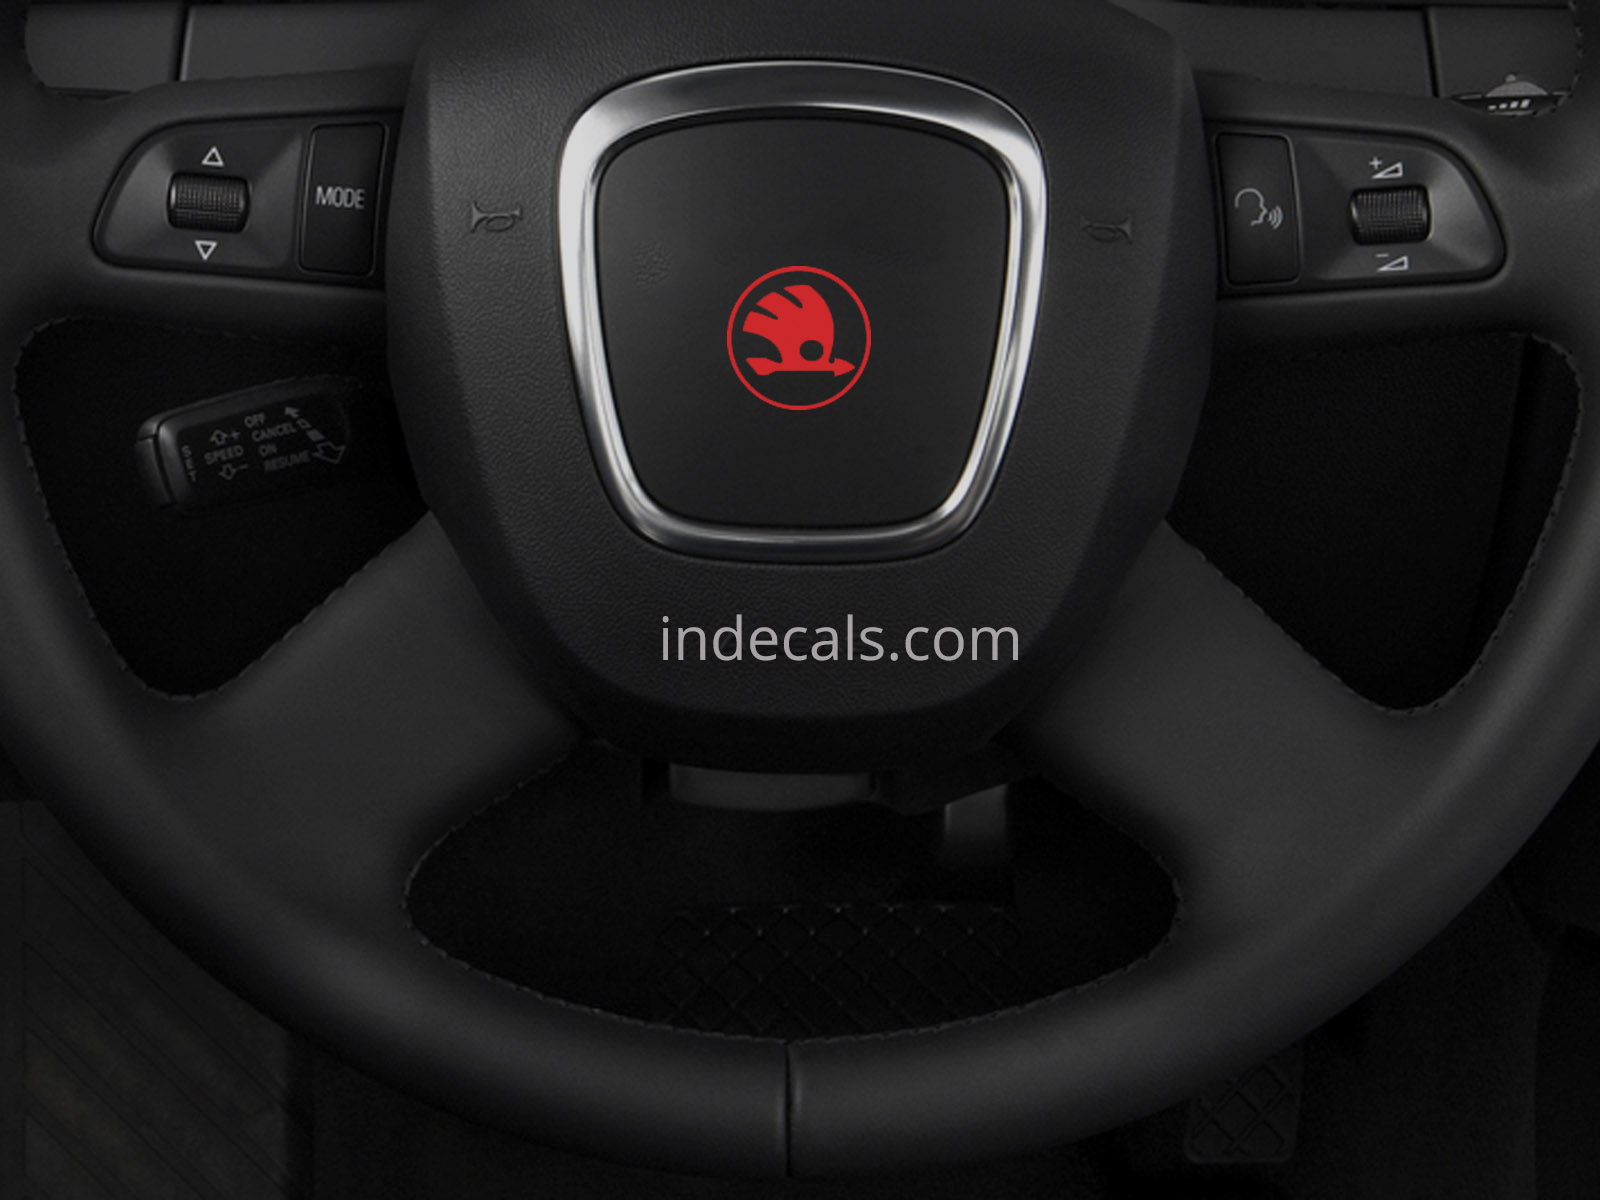 3 x Skoda Stickers for Steering Wheel - Red